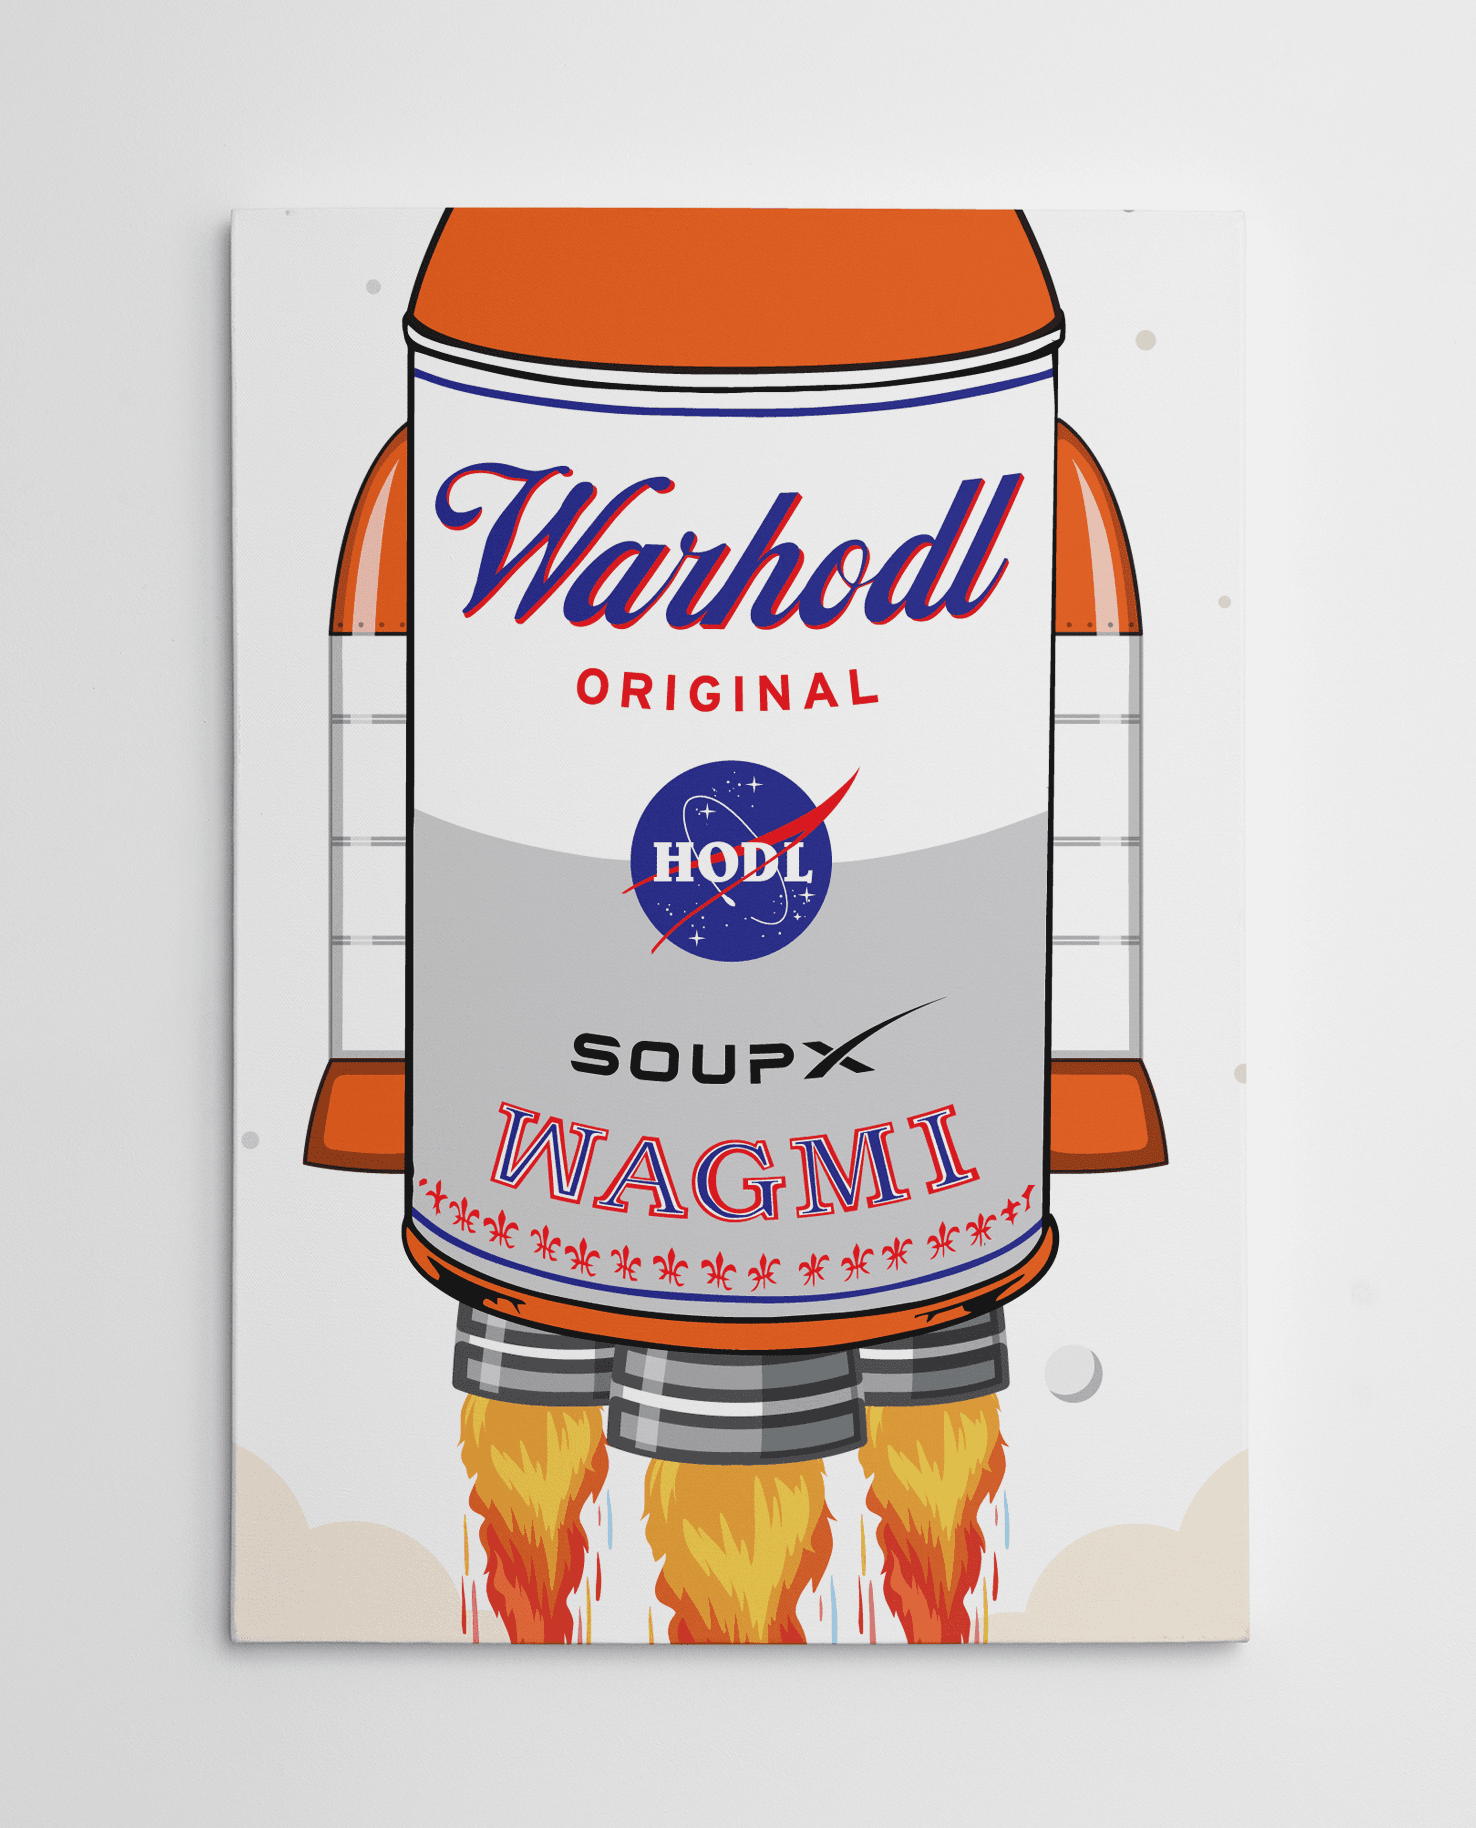 WARHODL "WAGMI" SoupX HODL Original Can